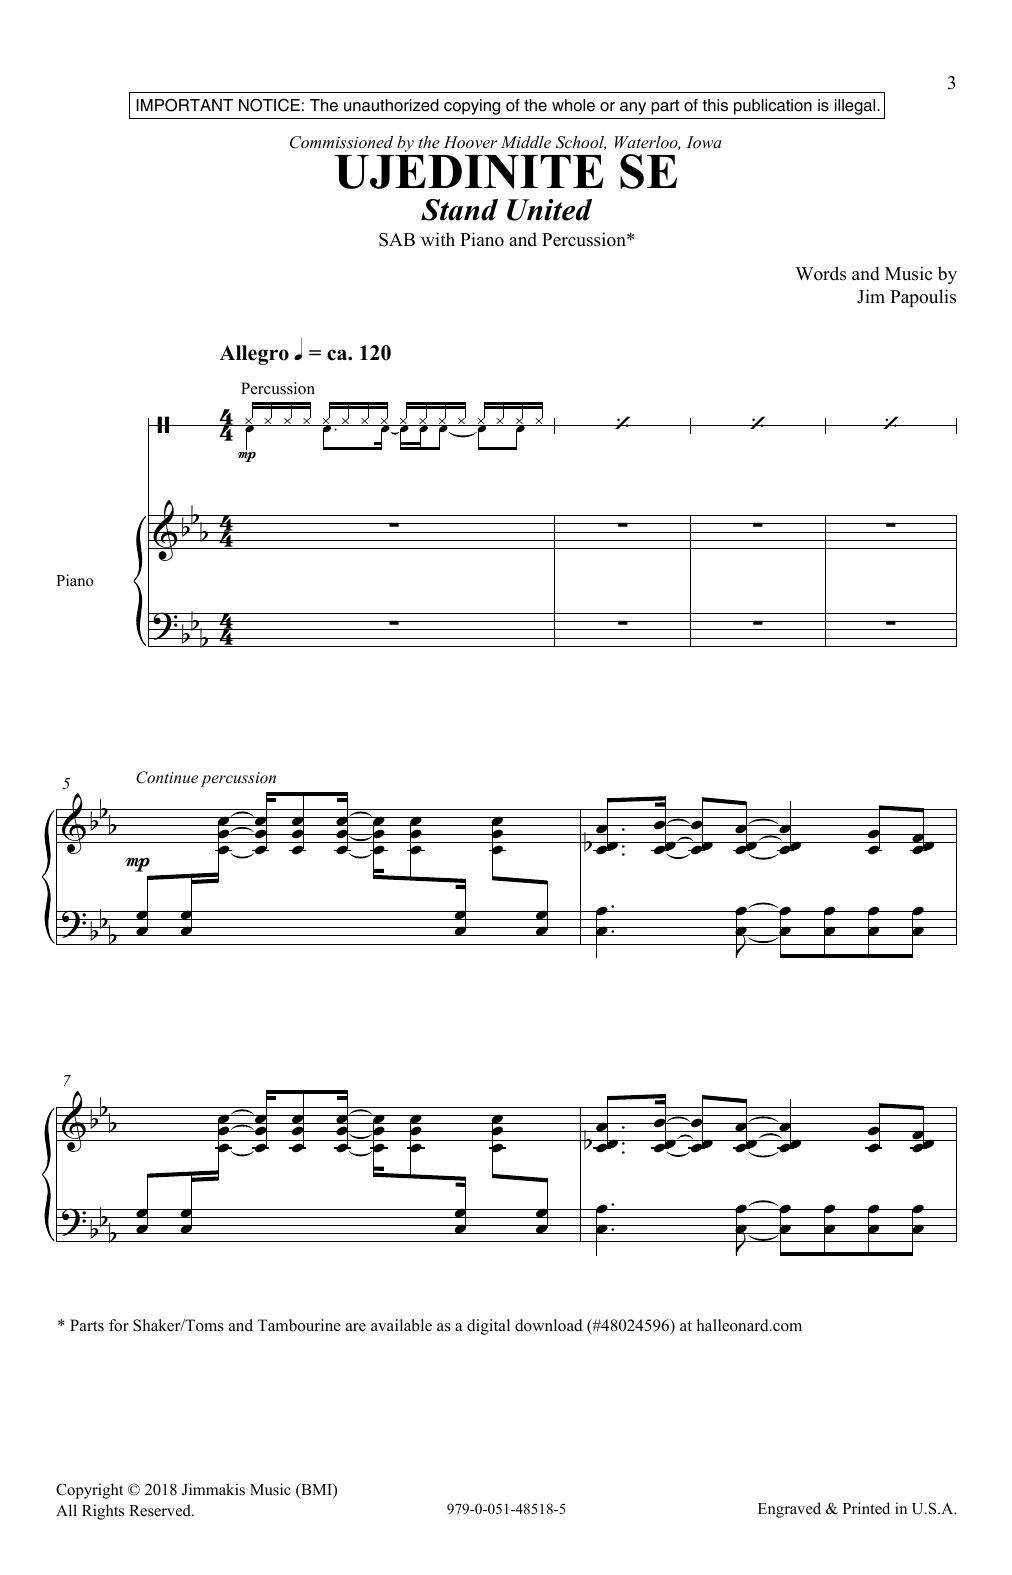 Download Jim Papoulis Ujedinite Se (Stand United) Sheet Music